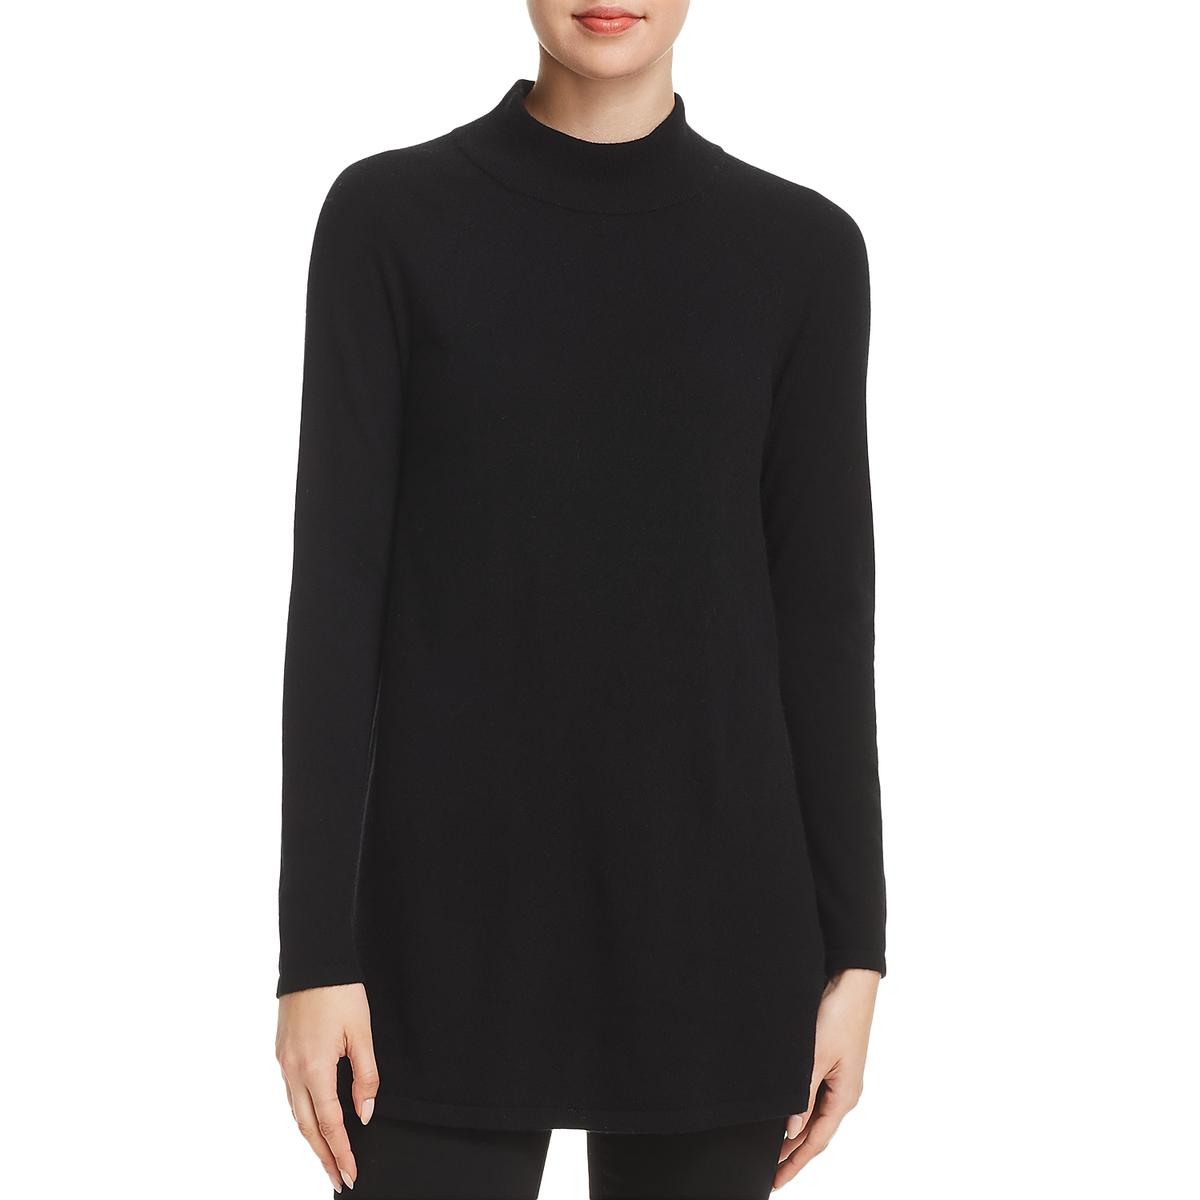 Eileen Fisher Womens Black Cashmere Mock Neck Tunic Sweater Top XS BHFO